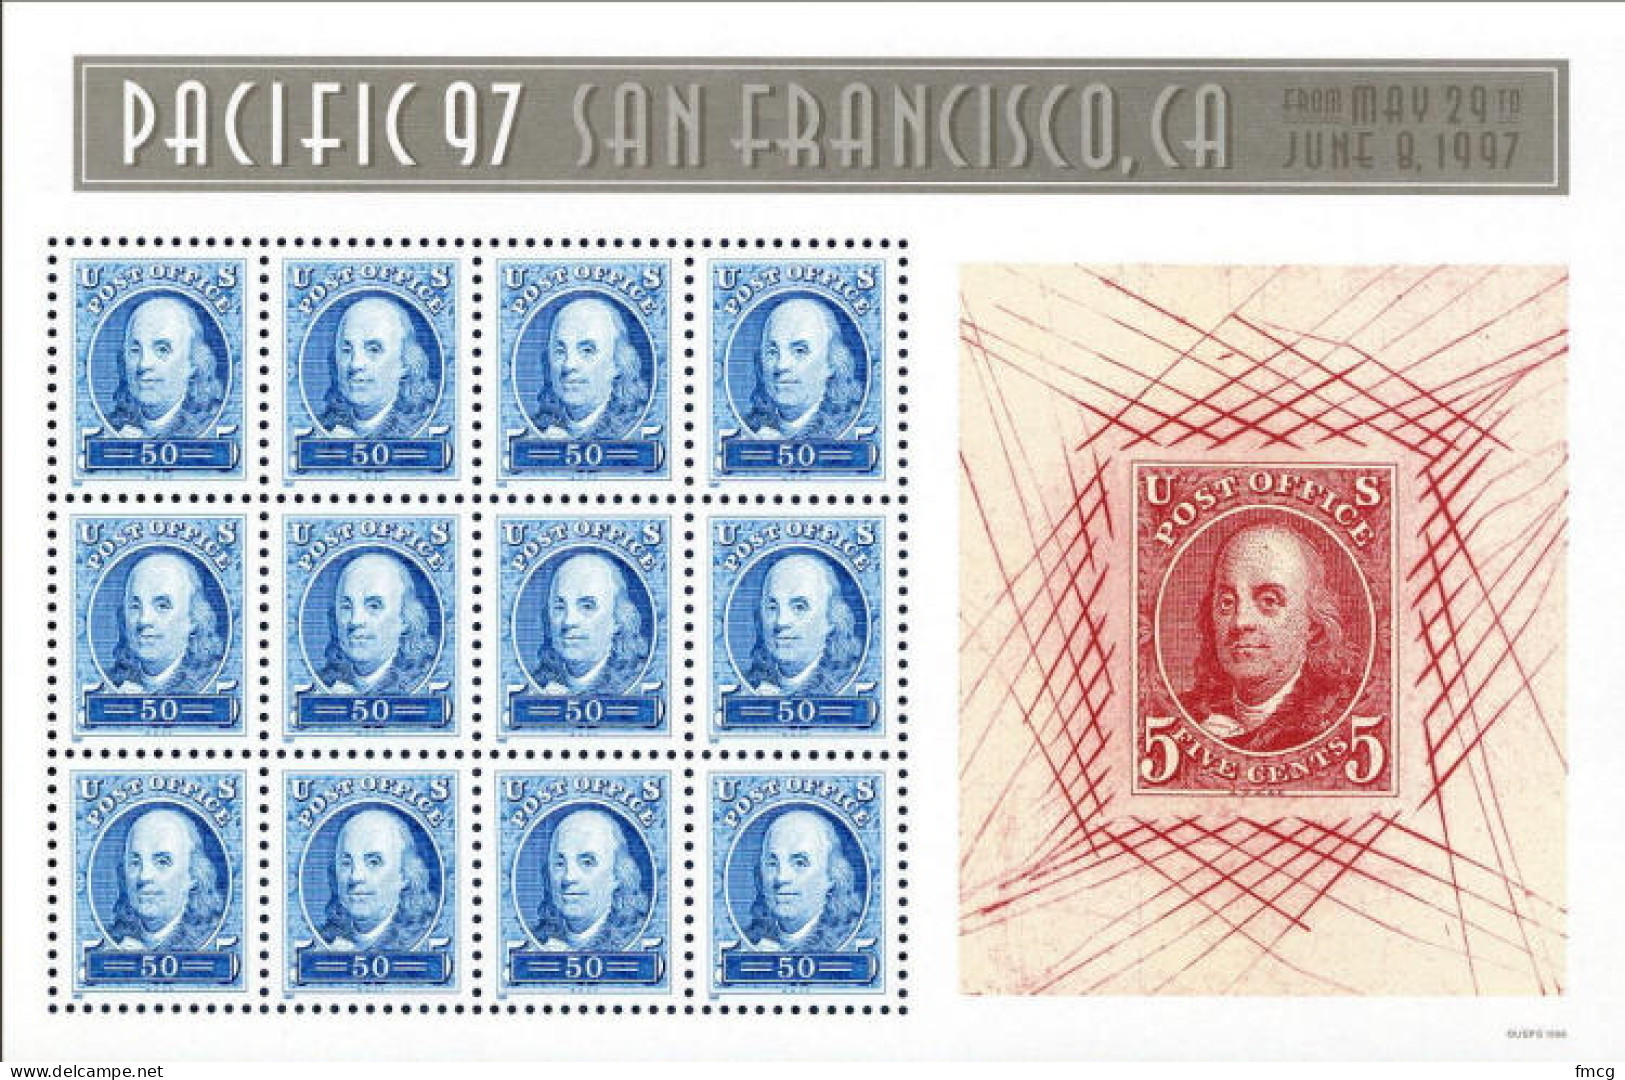 1997 Benjamin Franklin Sheet, Mint Never Hinged - Unused Stamps